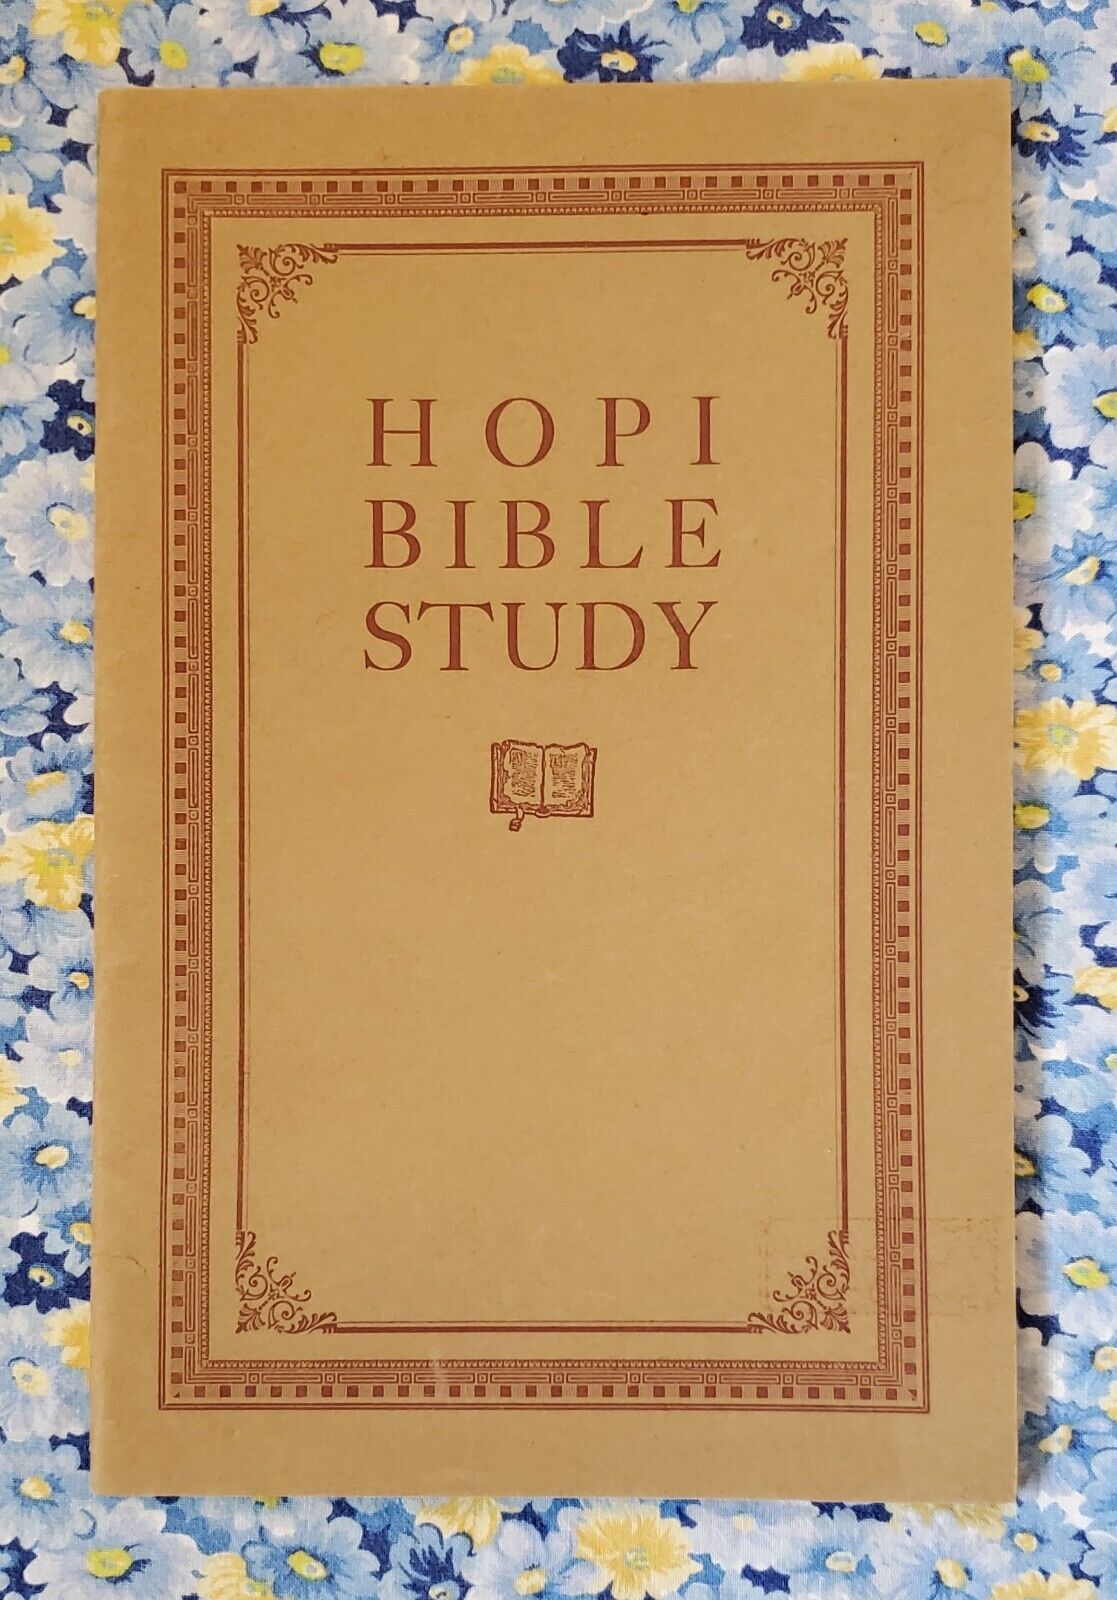 HOPI Bible Study, Otto Lomavitu and J. R. Duerksen, 1924, Paperback